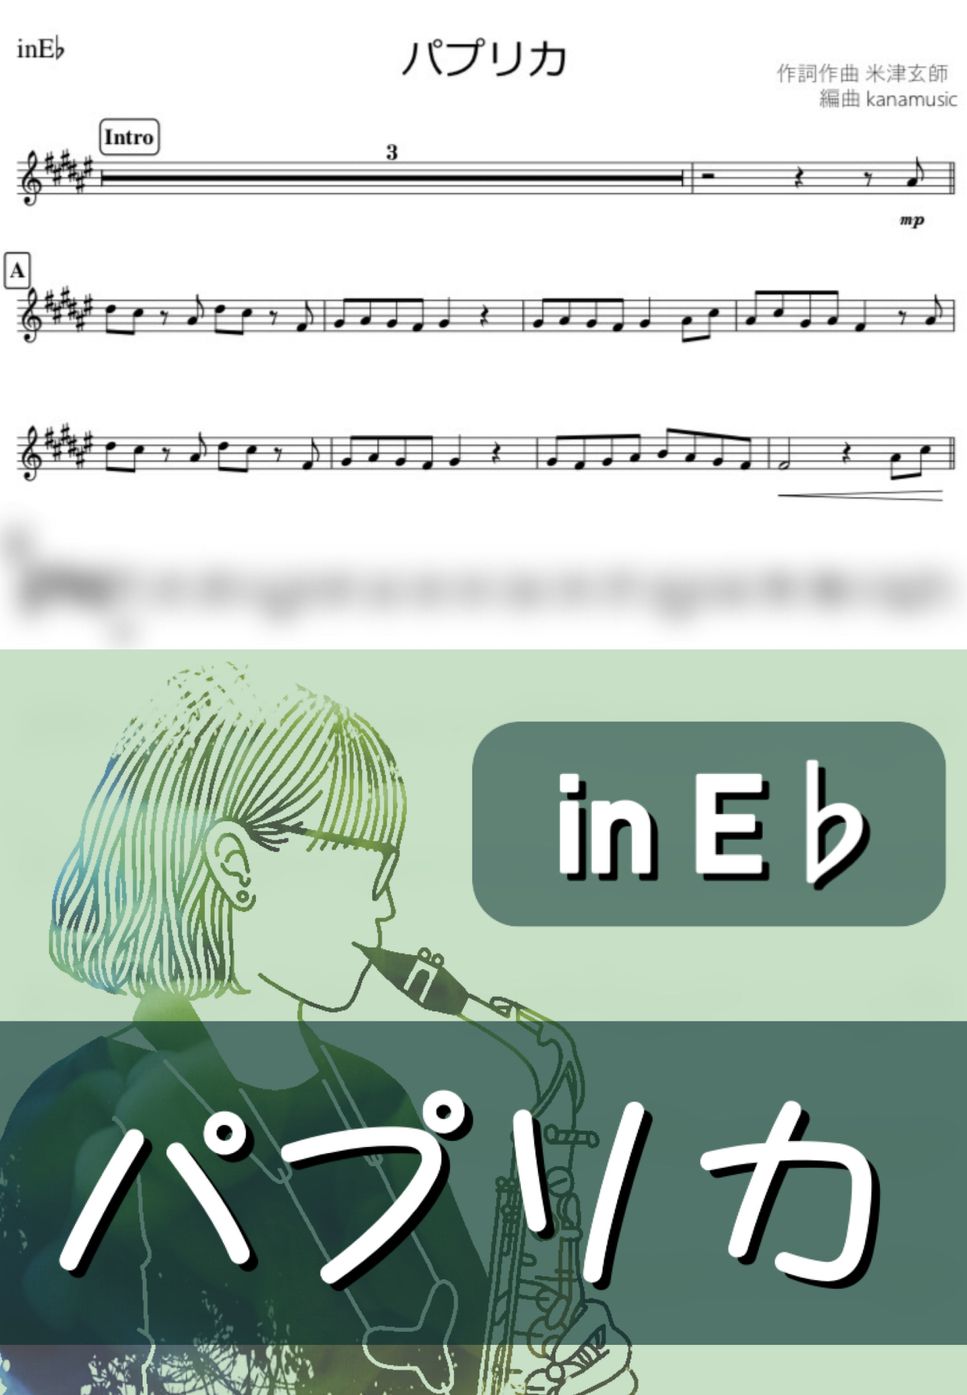 Foorin - パプリカ (E♭) by kanamusic